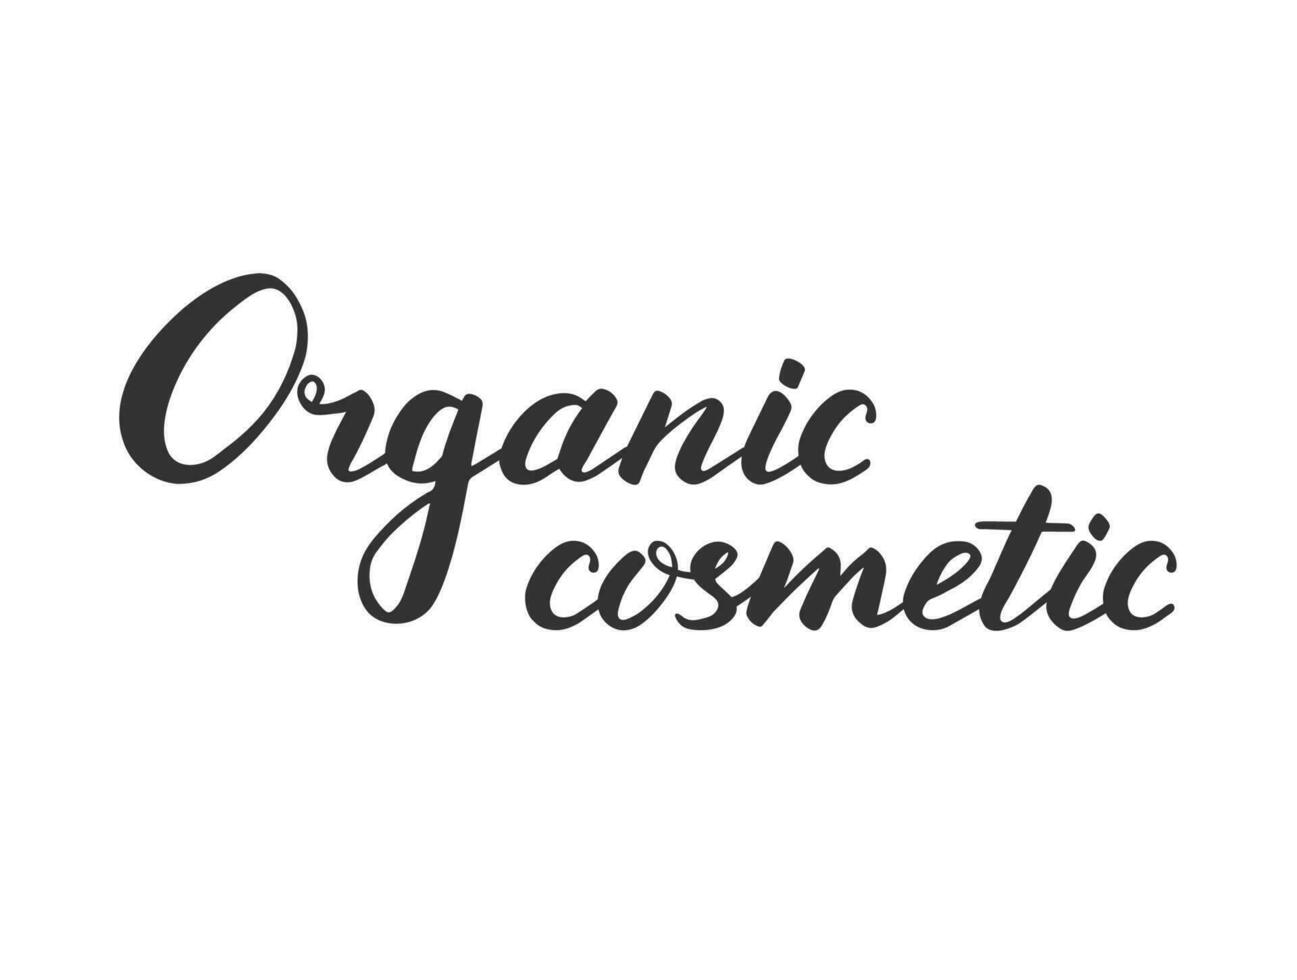 organisk kosmetisk text på vit bakgrund. vektor illustration